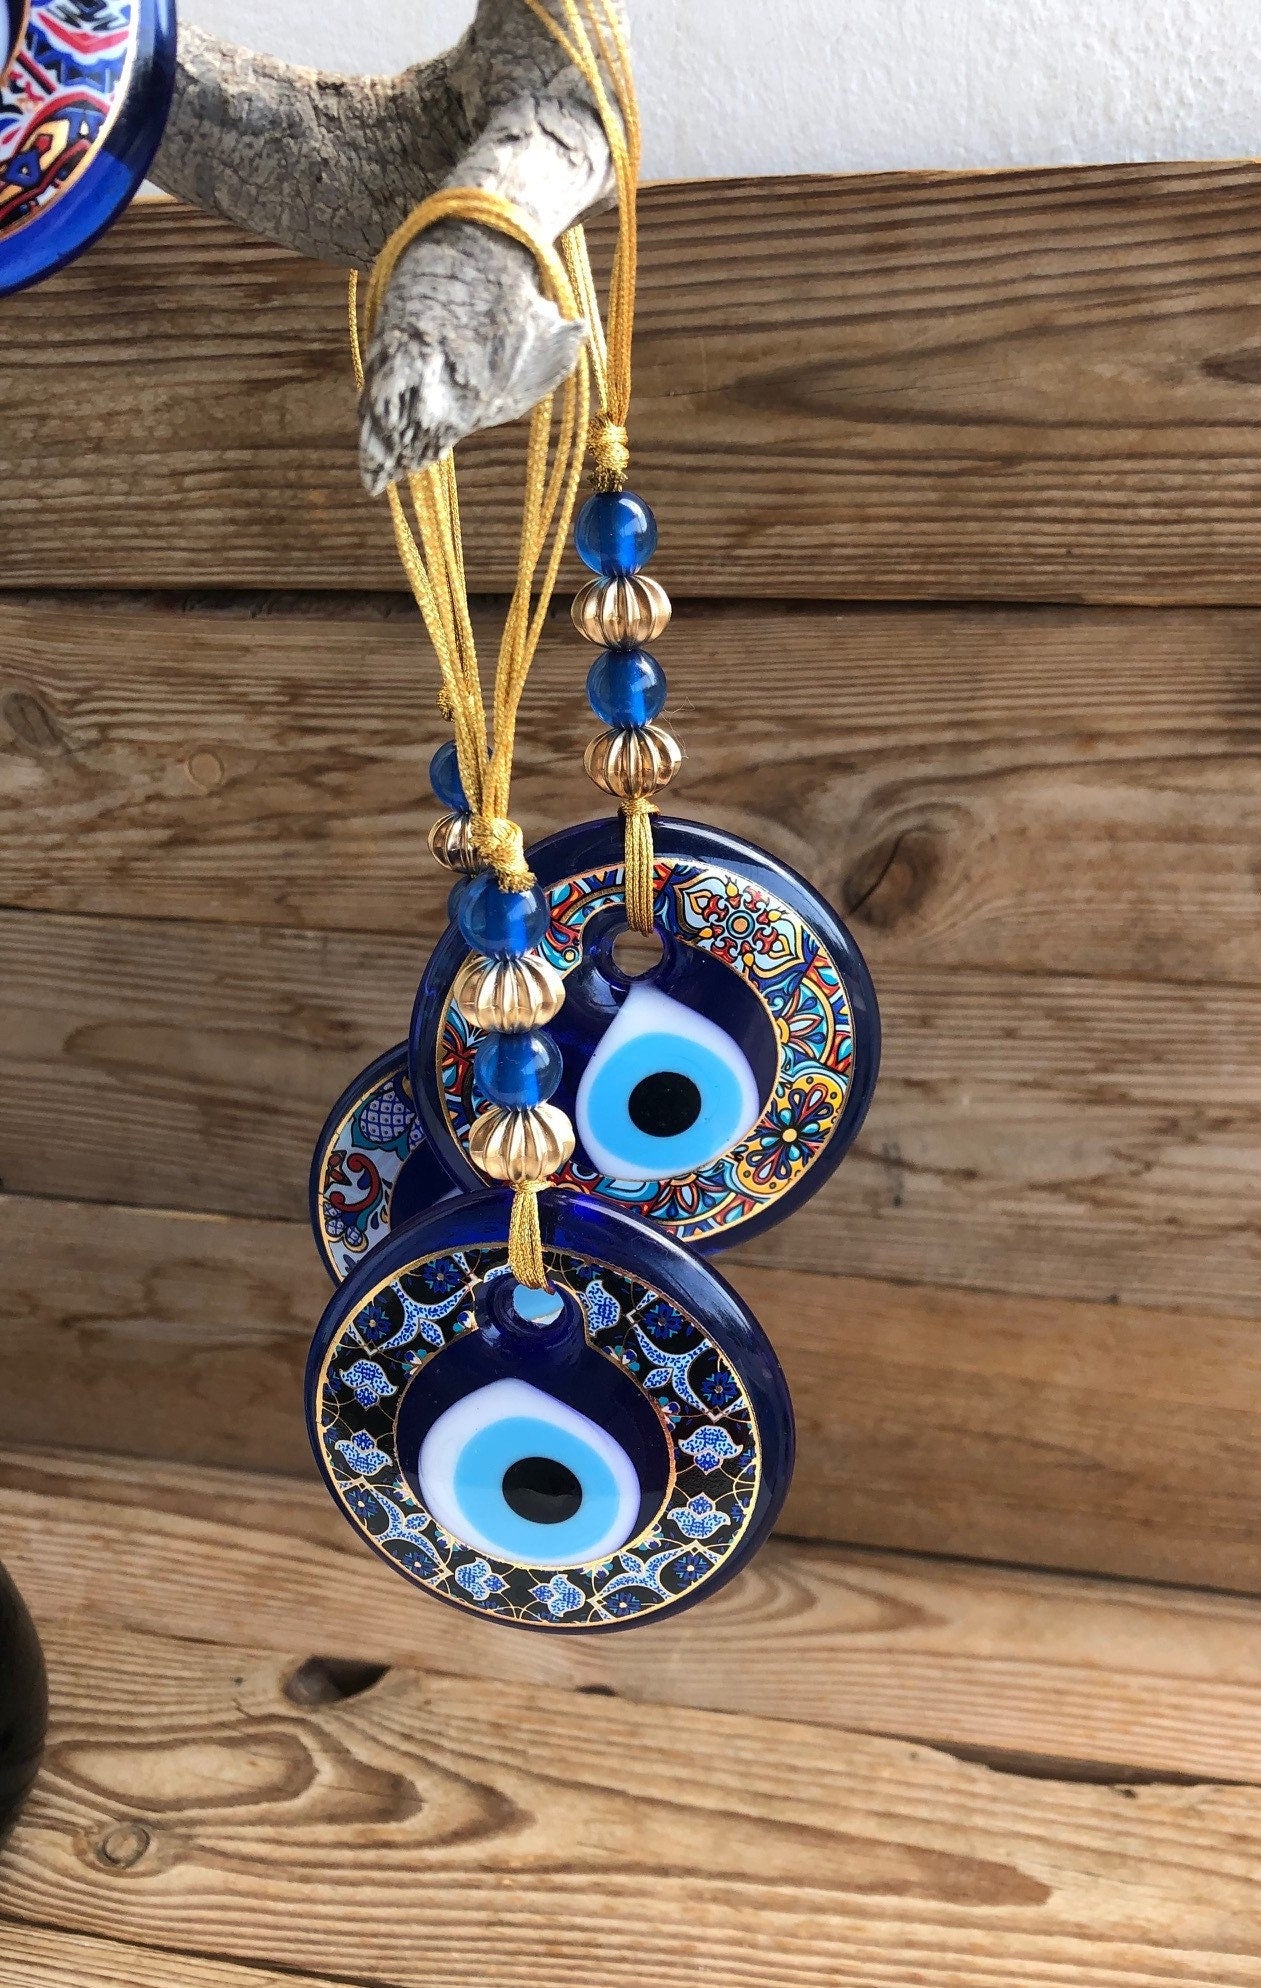 Evil Eye Wall Hanging - 7.5 cm Glass Eye - Home Protection & Good Luck Decor